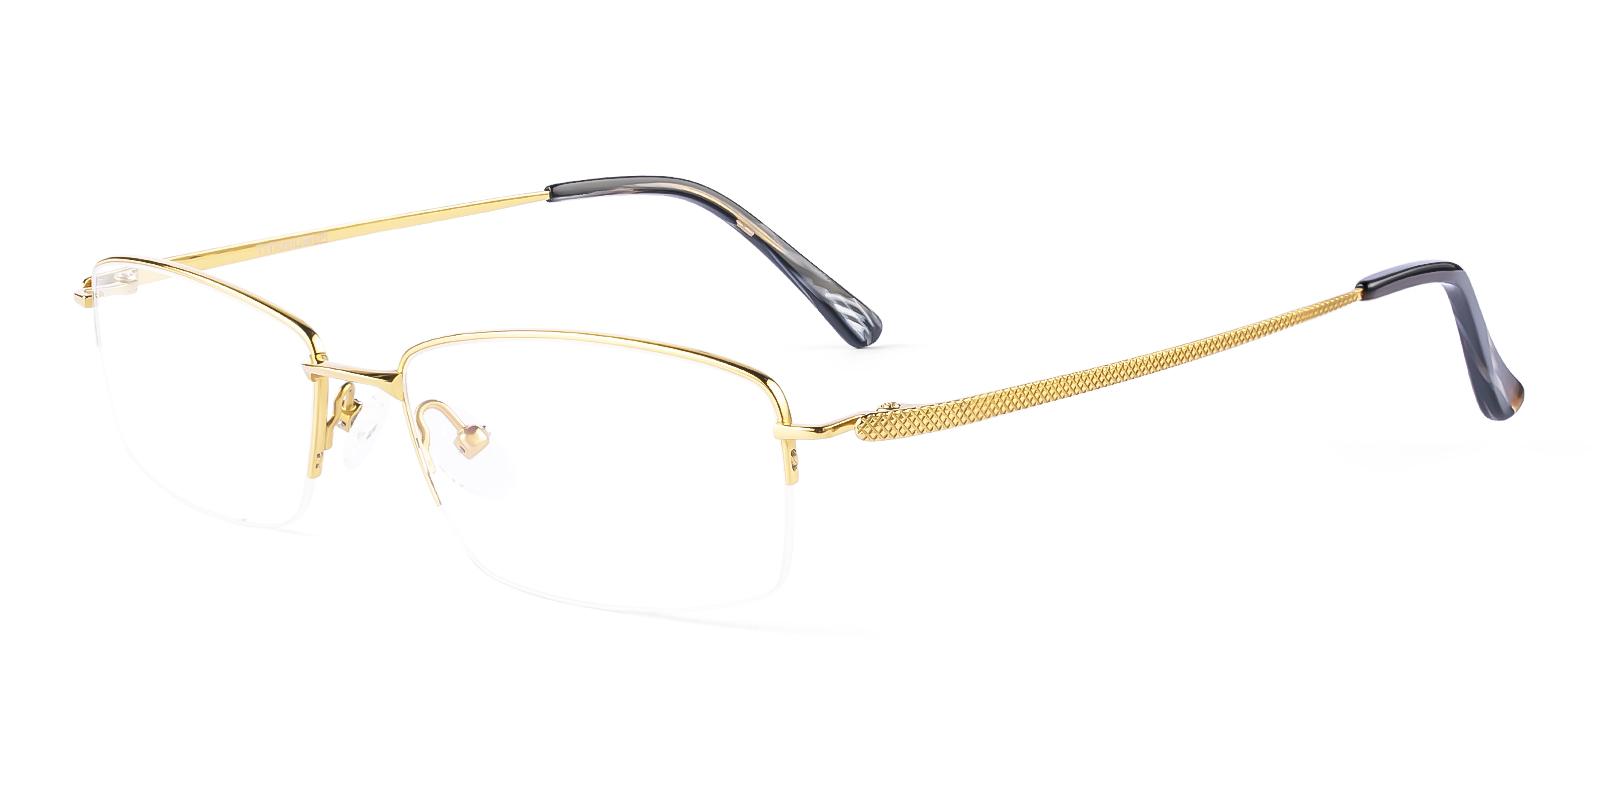 Bateur Gold Titanium Eyeglasses , NosePads Frames from ABBE Glasses